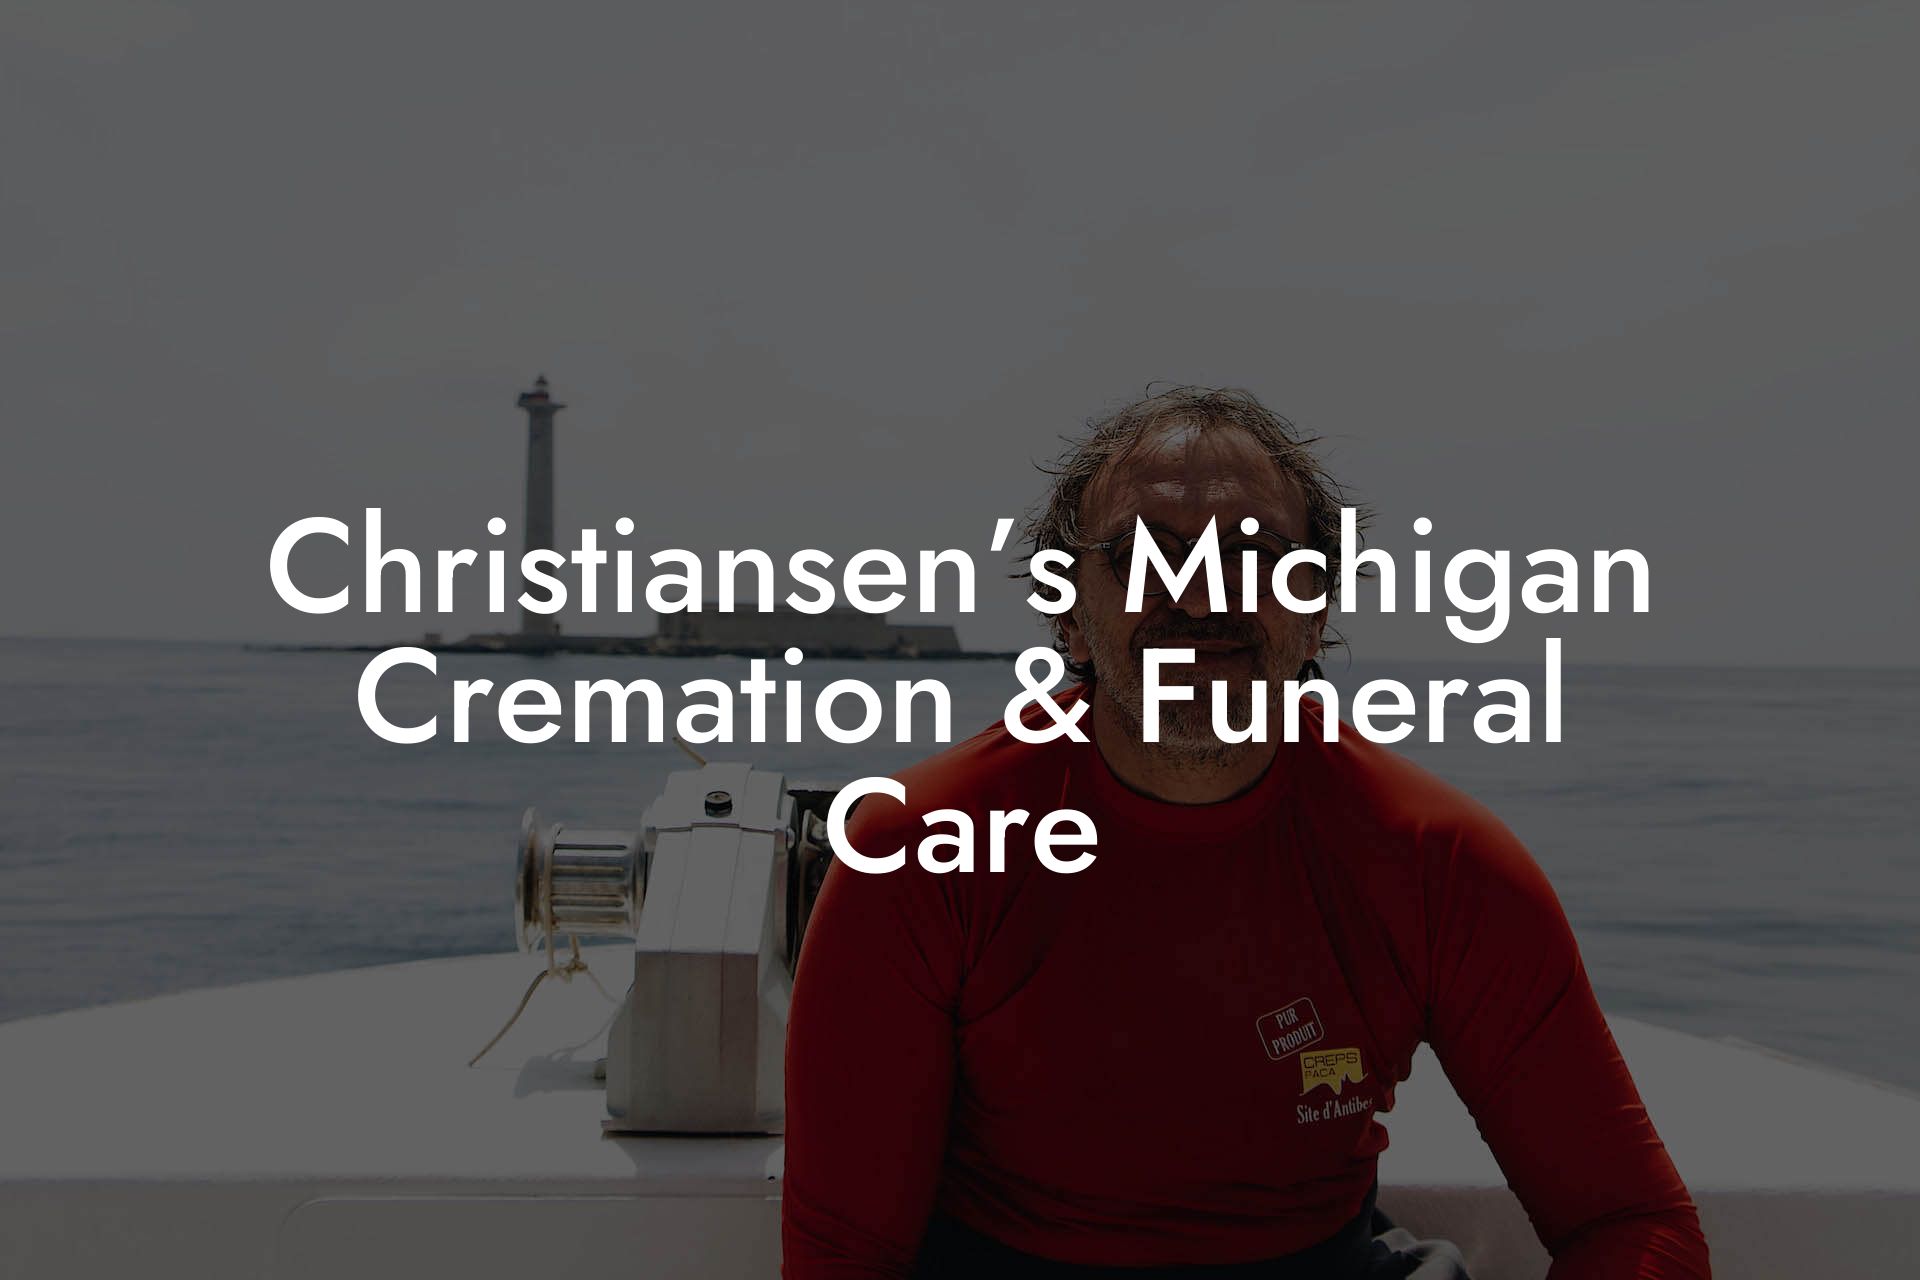 Christiansen’s Michigan Cremation & Funeral Care